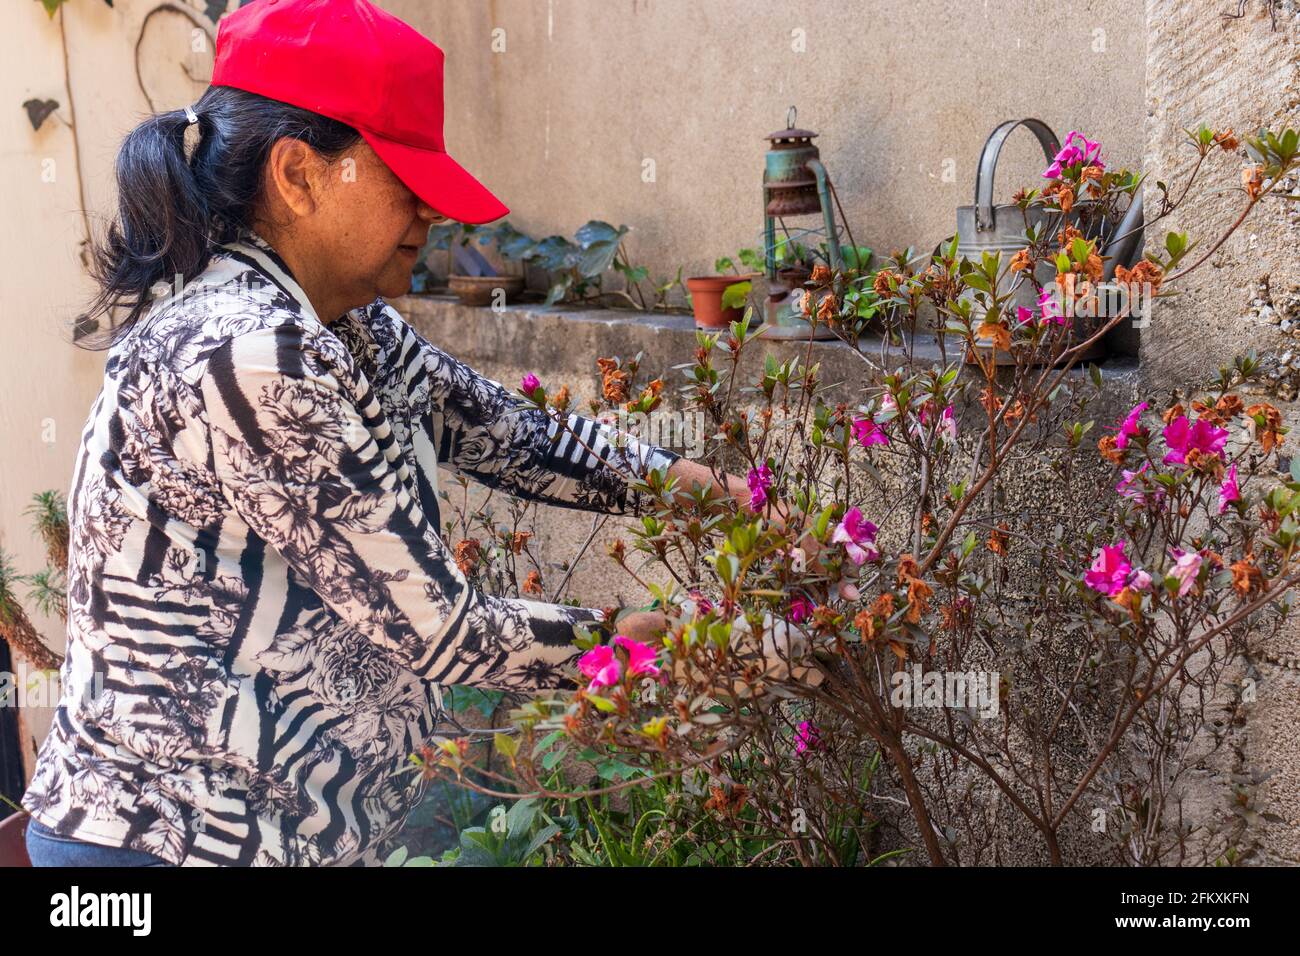 Hispanic woman gardening plants and flowers Stock Photo